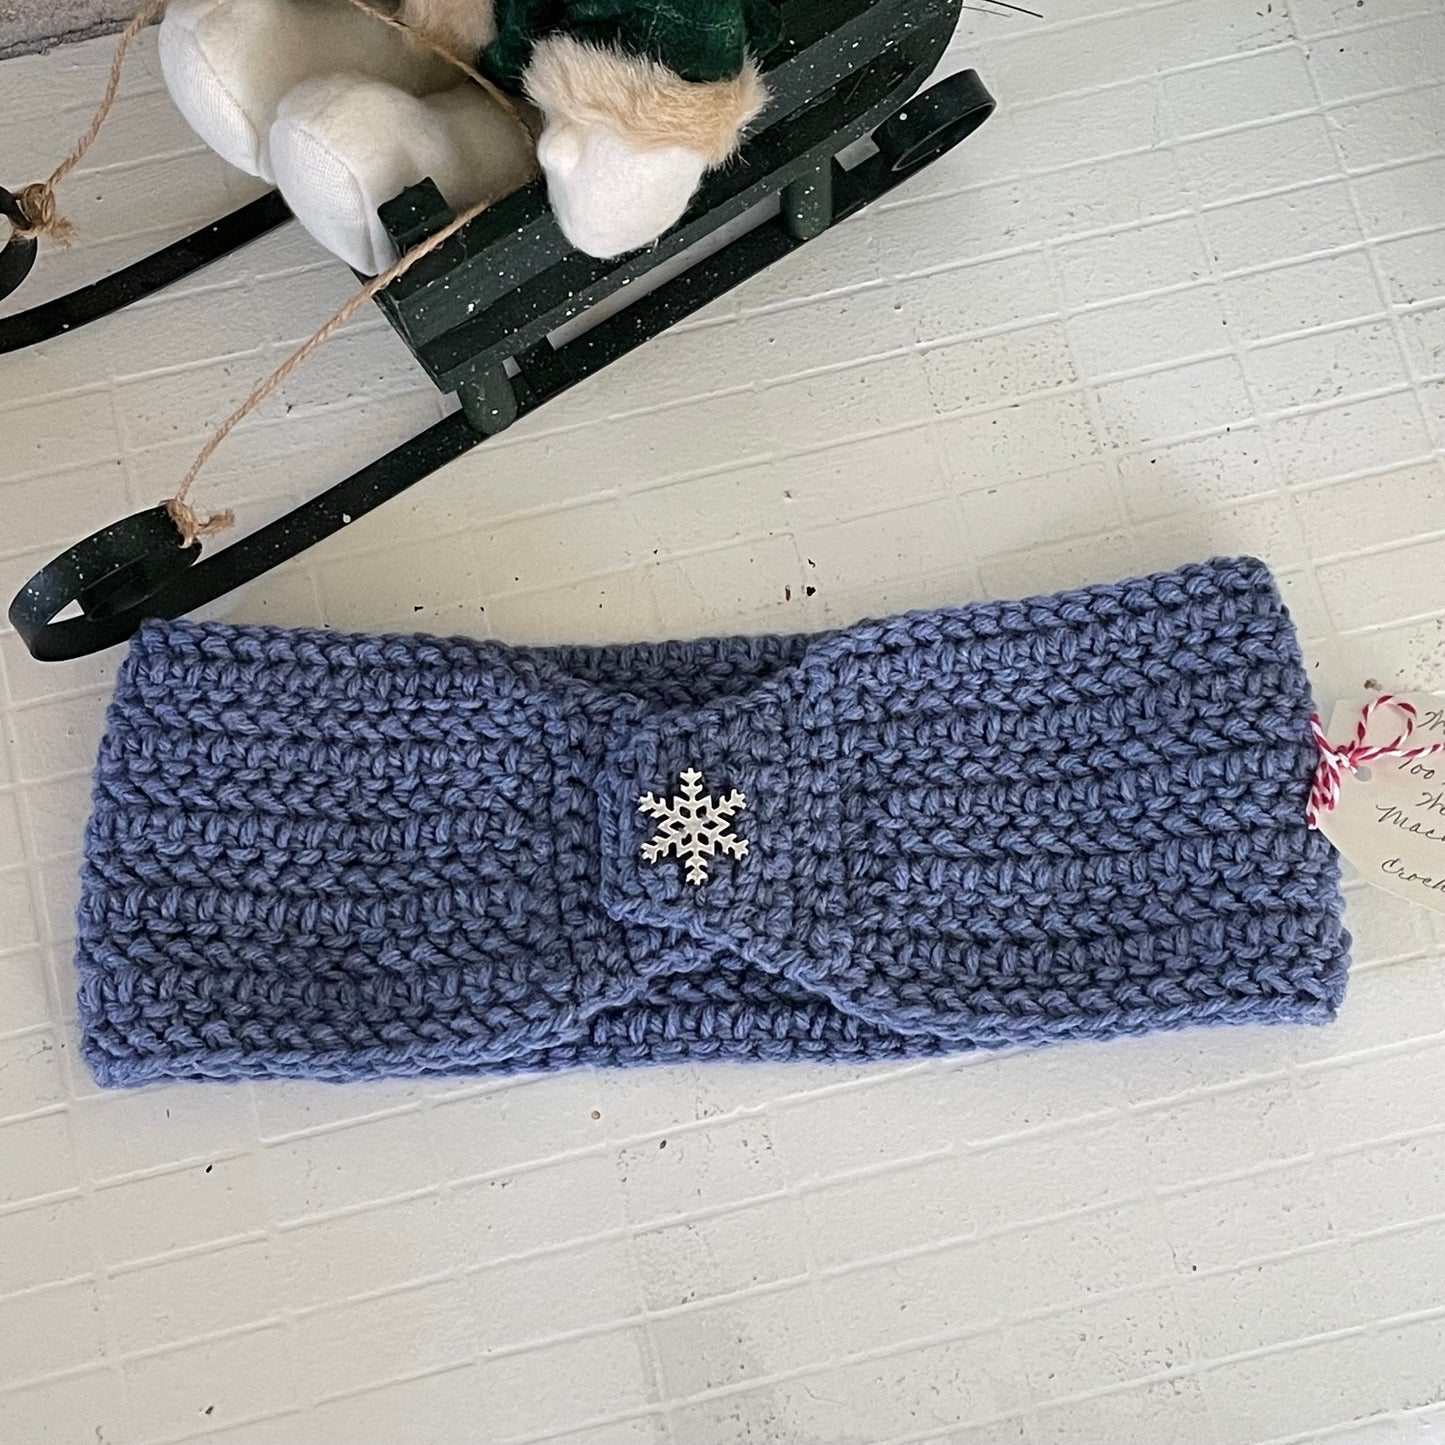 Periwinkle & Metal Snowflake Ear Warmer Headband Crochet Knit Hand Crafted Outdoor Fall Winter Hiking Running Blue Purple Pastel